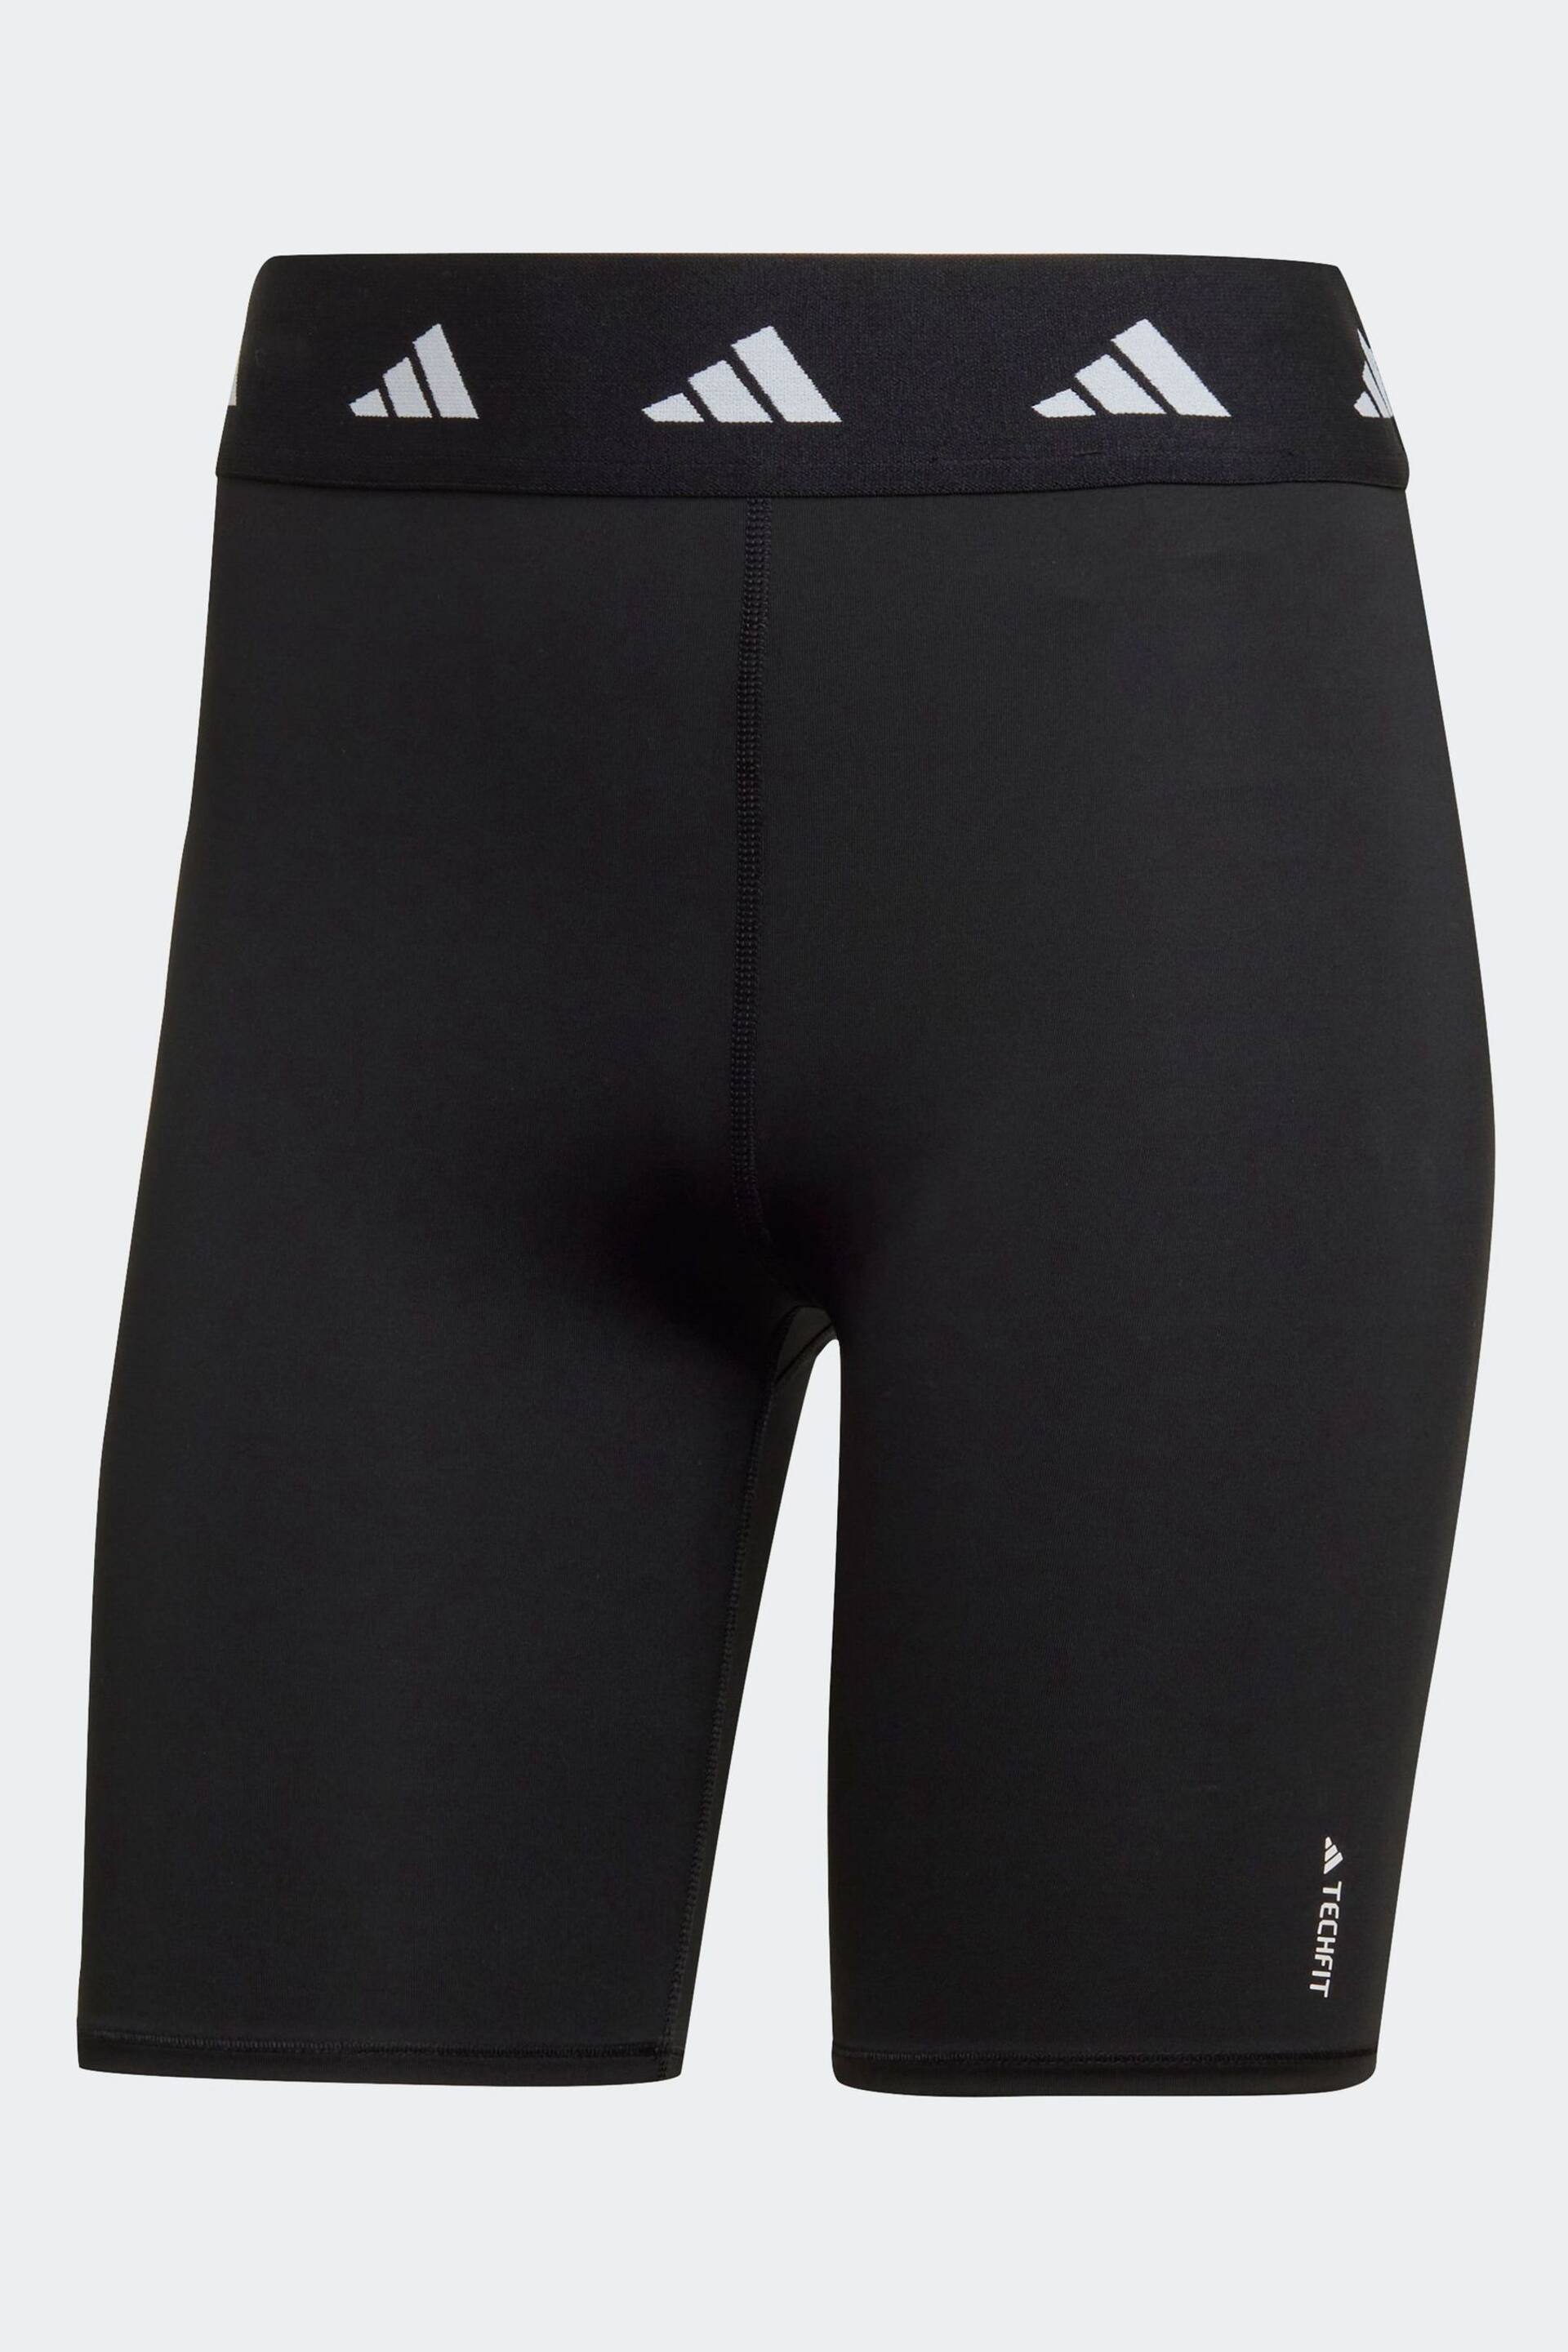 adidas Black Techfit Bike Shorts - Image 6 of 6